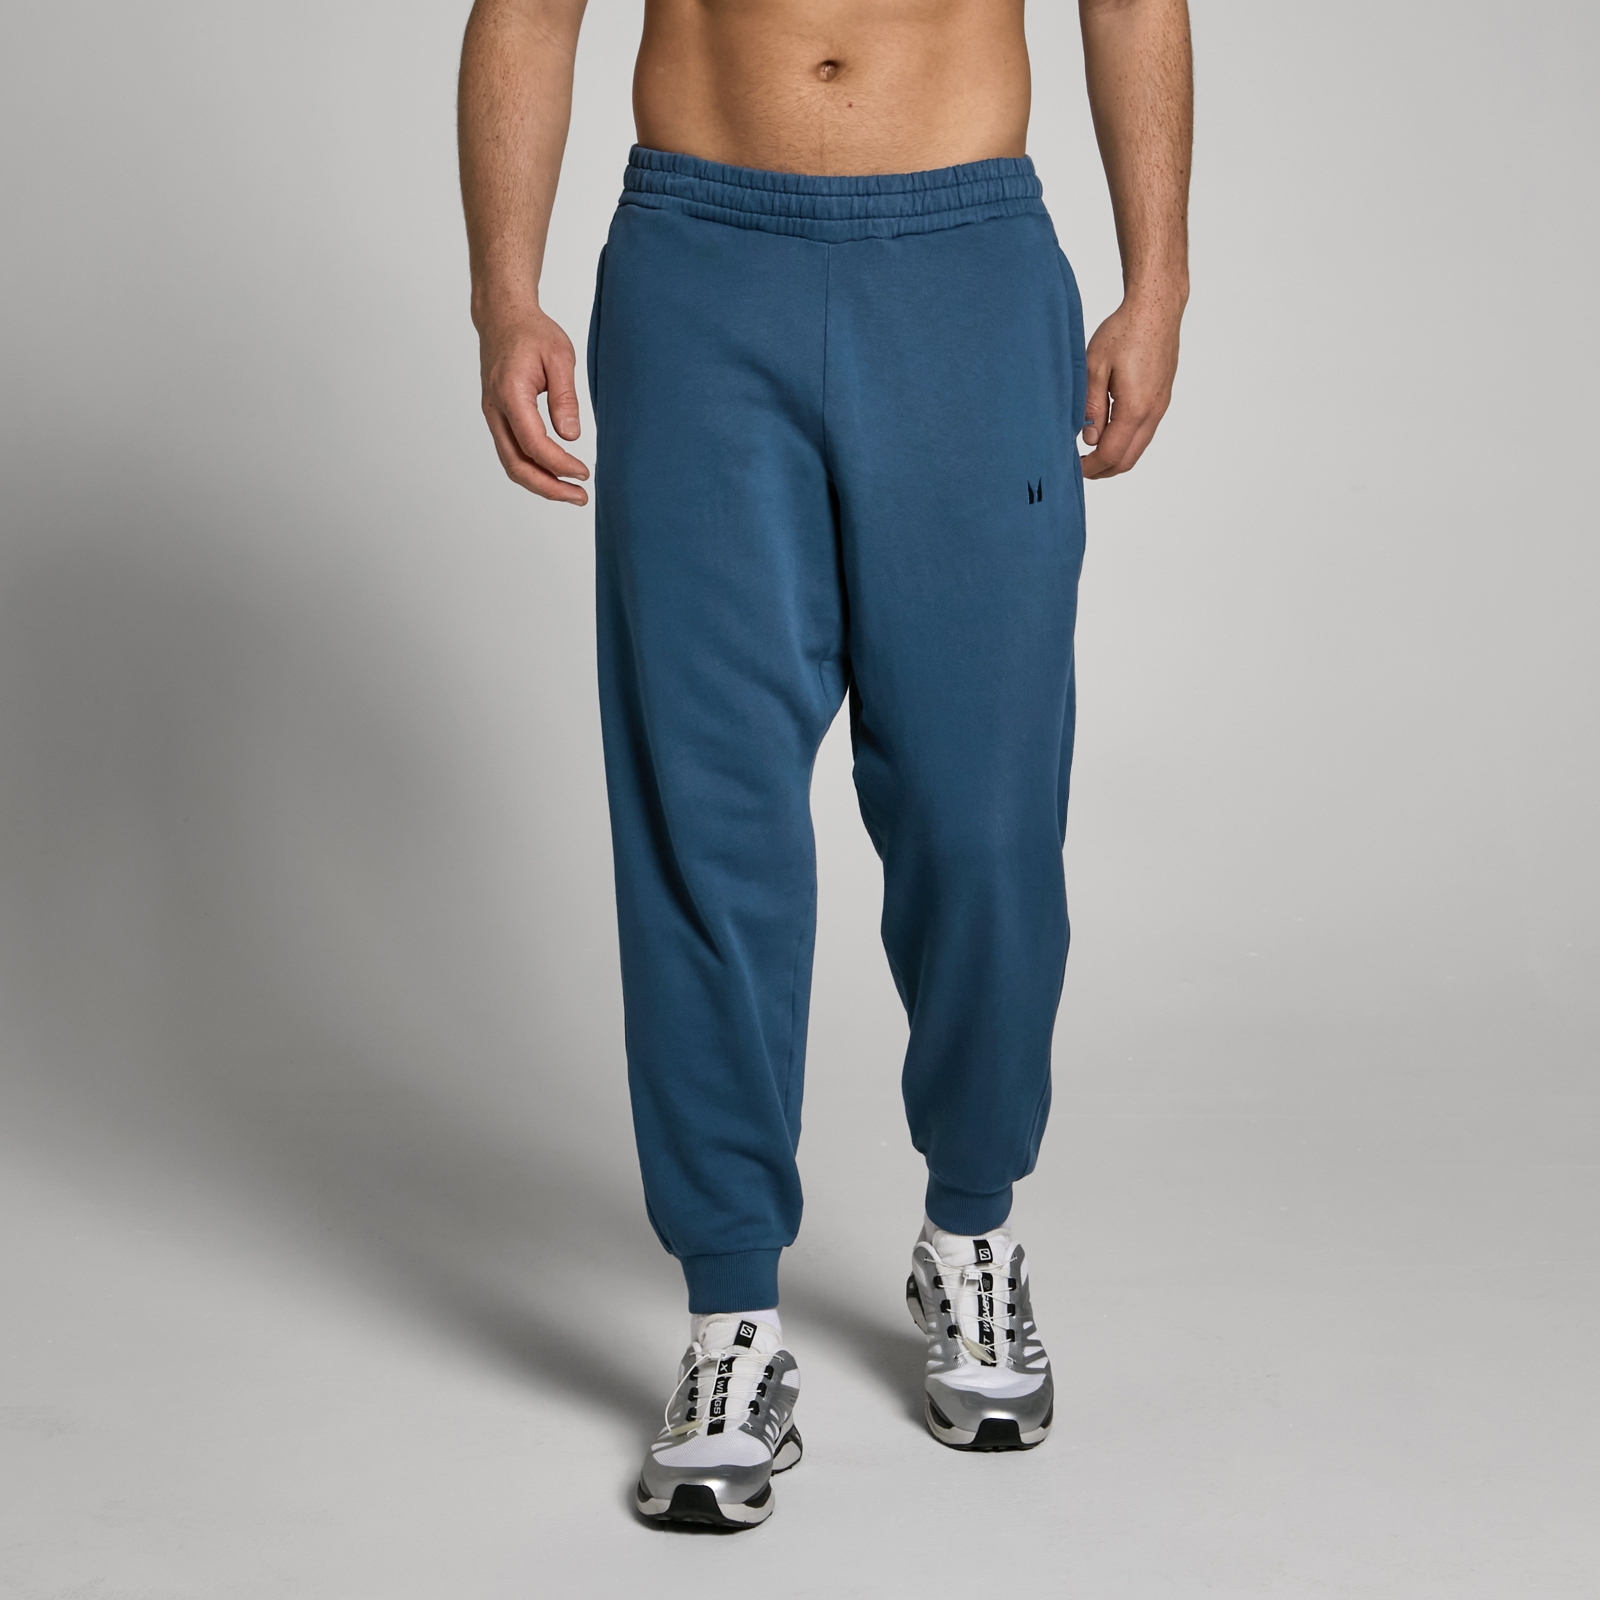 Image of Pantaloni da jogging slavati MP Tempo da uomo - Blu navy slavato - L